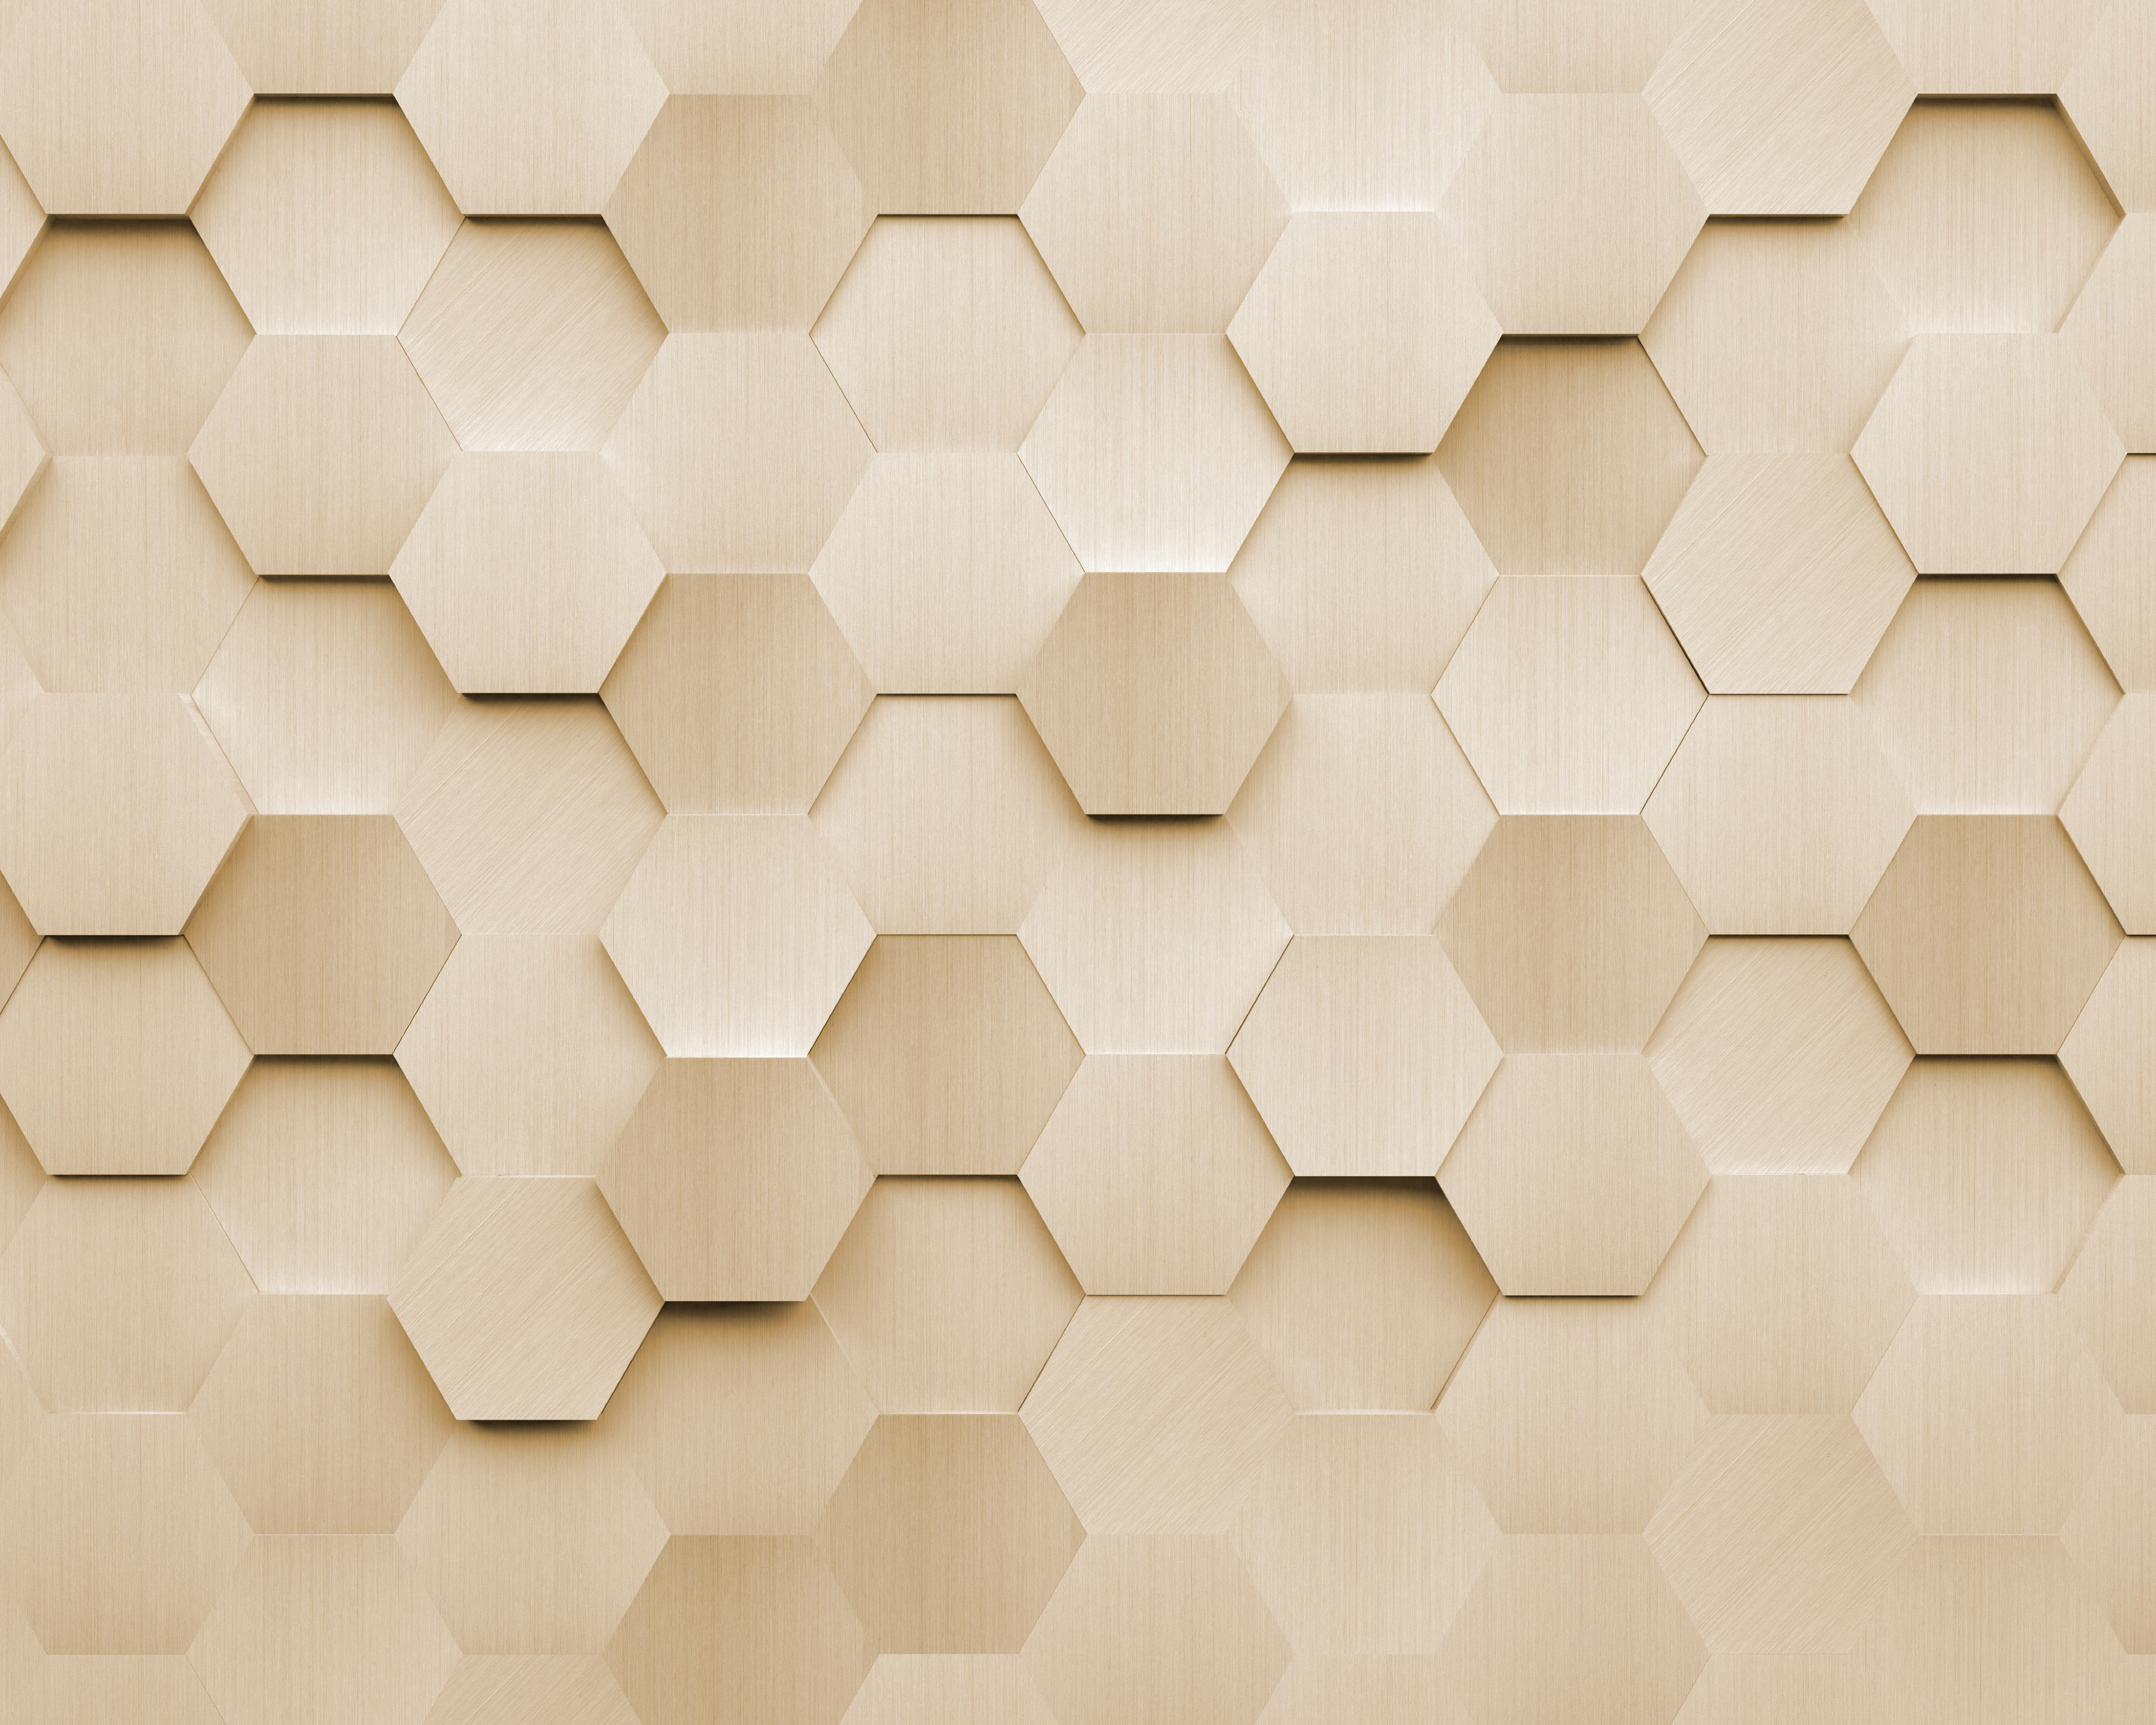 Image of Origin Murals Metal Hexagons Gold Wall Mural - 3 x 2.4m